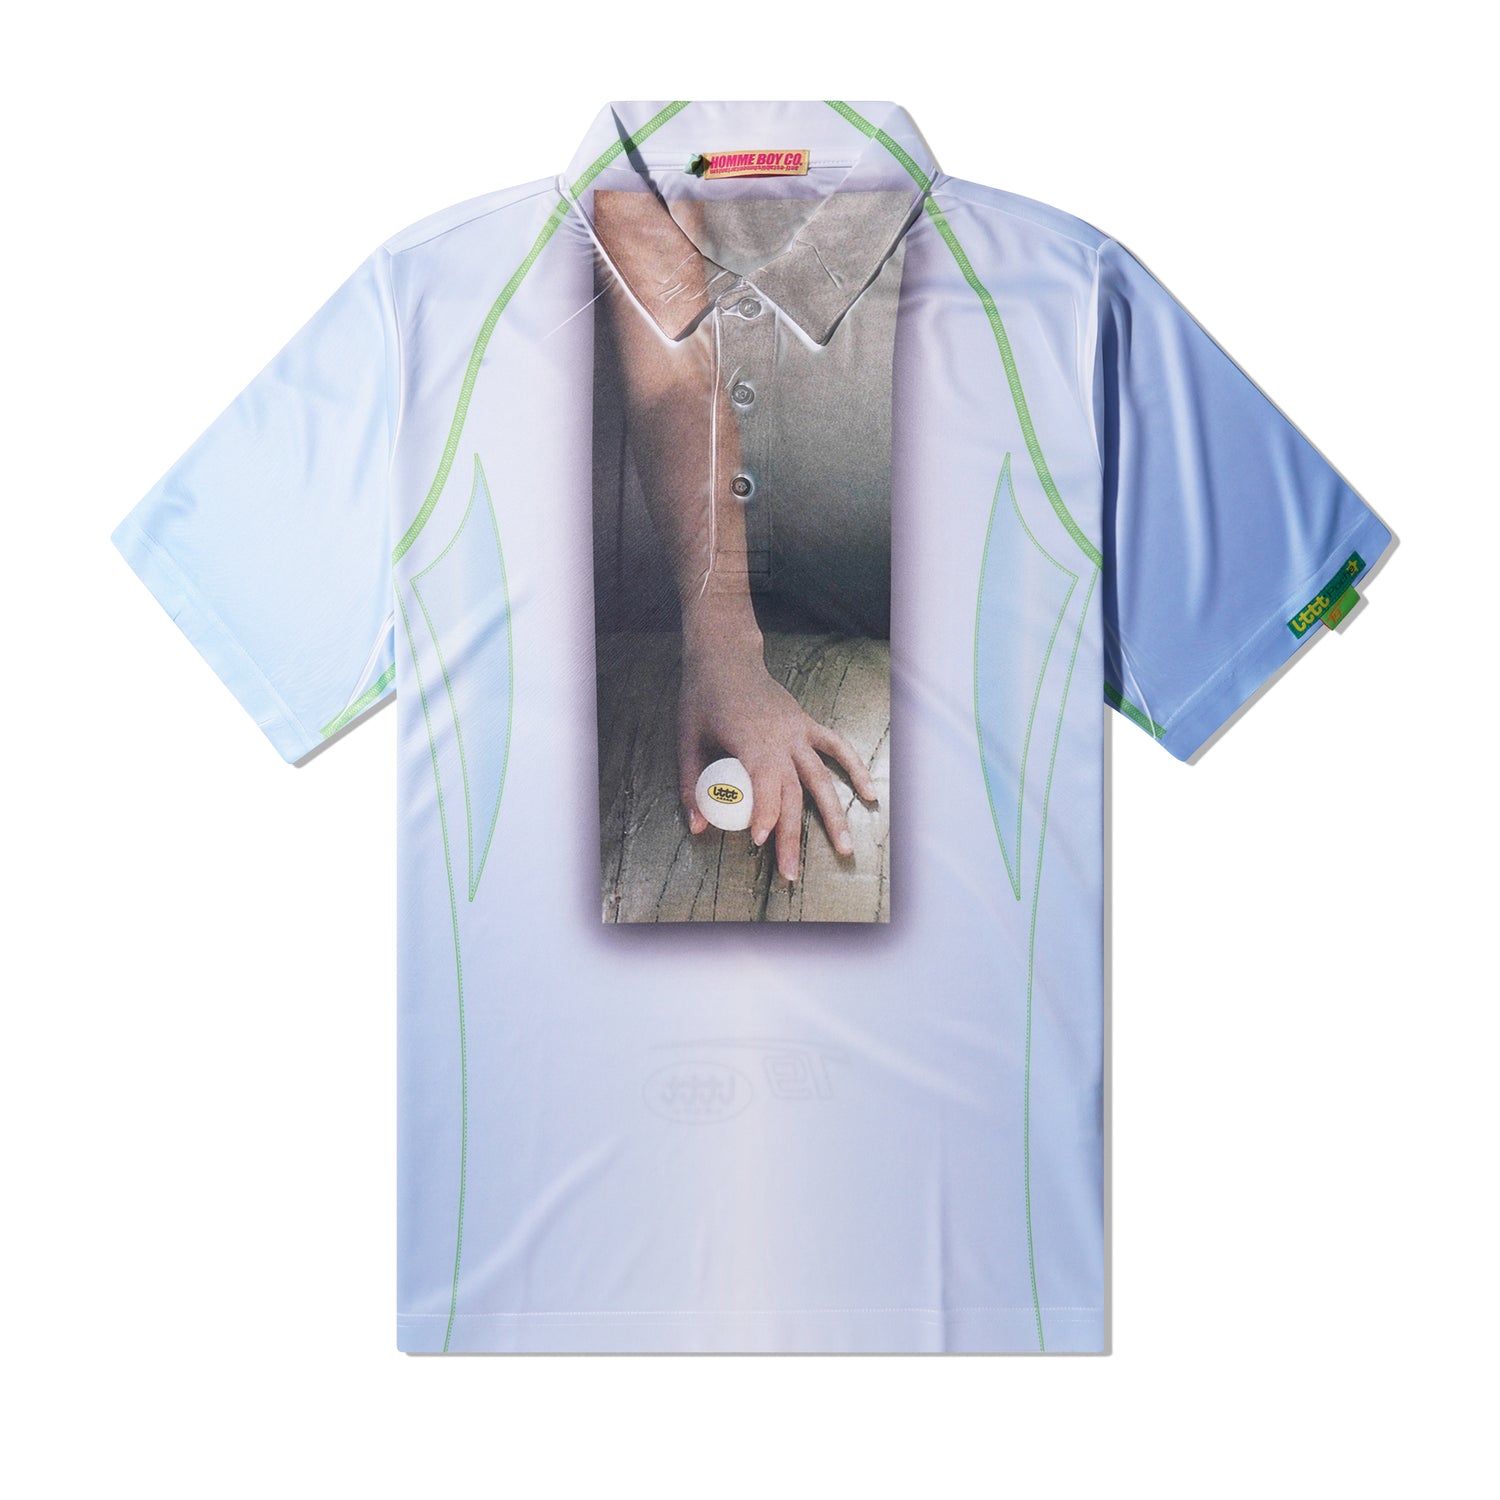 jk50 Collared Shirt, Multi